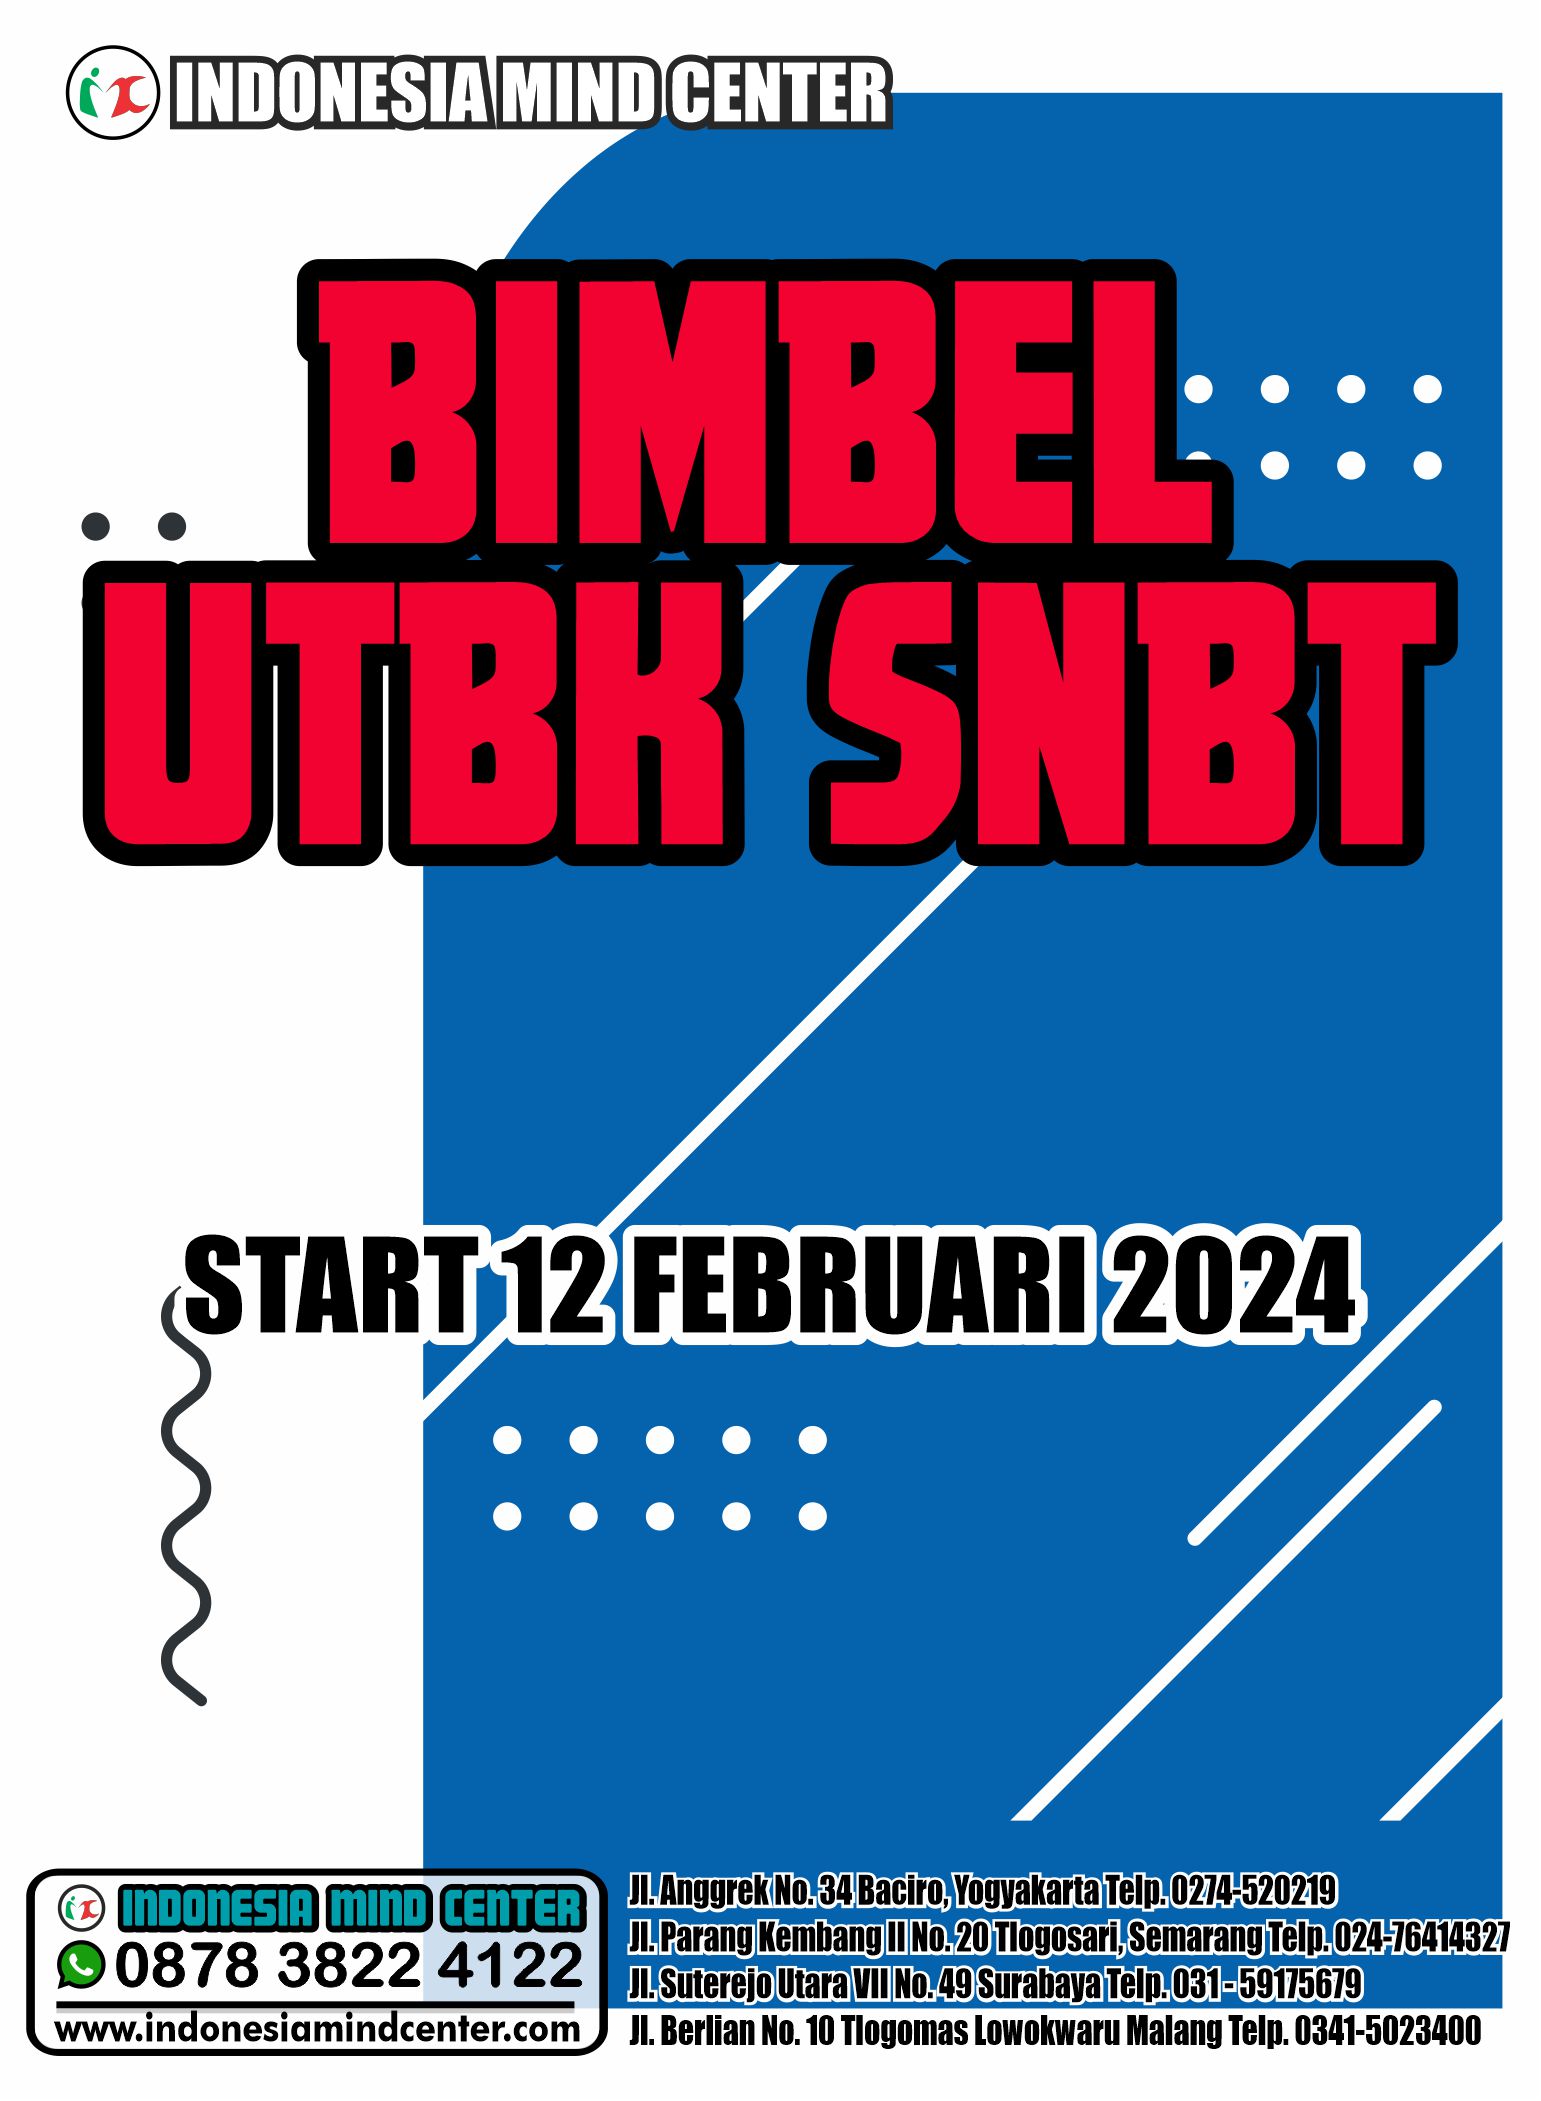 BIMBEL UTBK SNBT START 12 FEBRUARI 2024